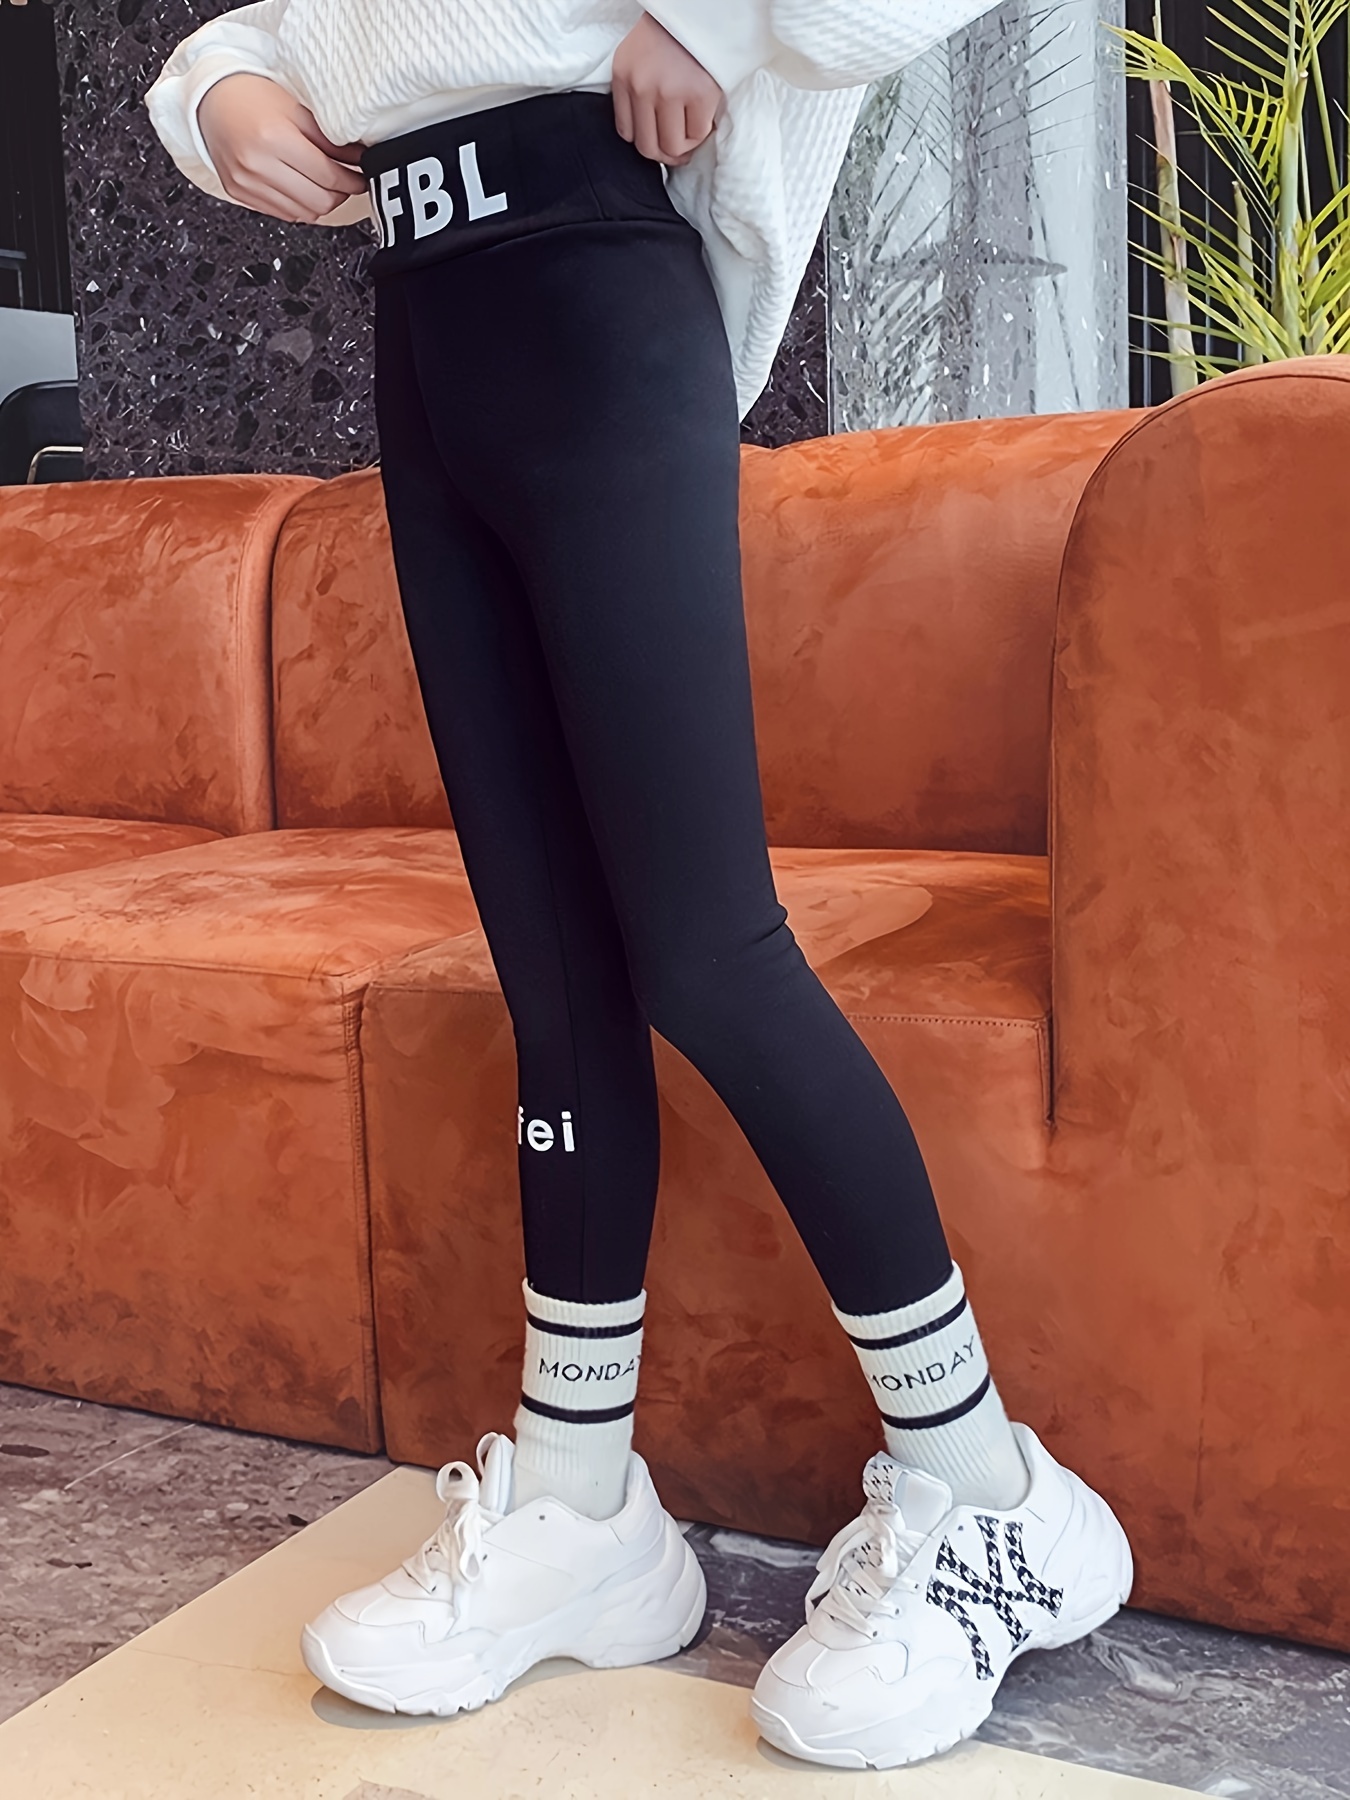 Elegant Girls Stretchy Letter Graphic Leggings Comfy Gymshark Leggings  Outdoor Sports Running